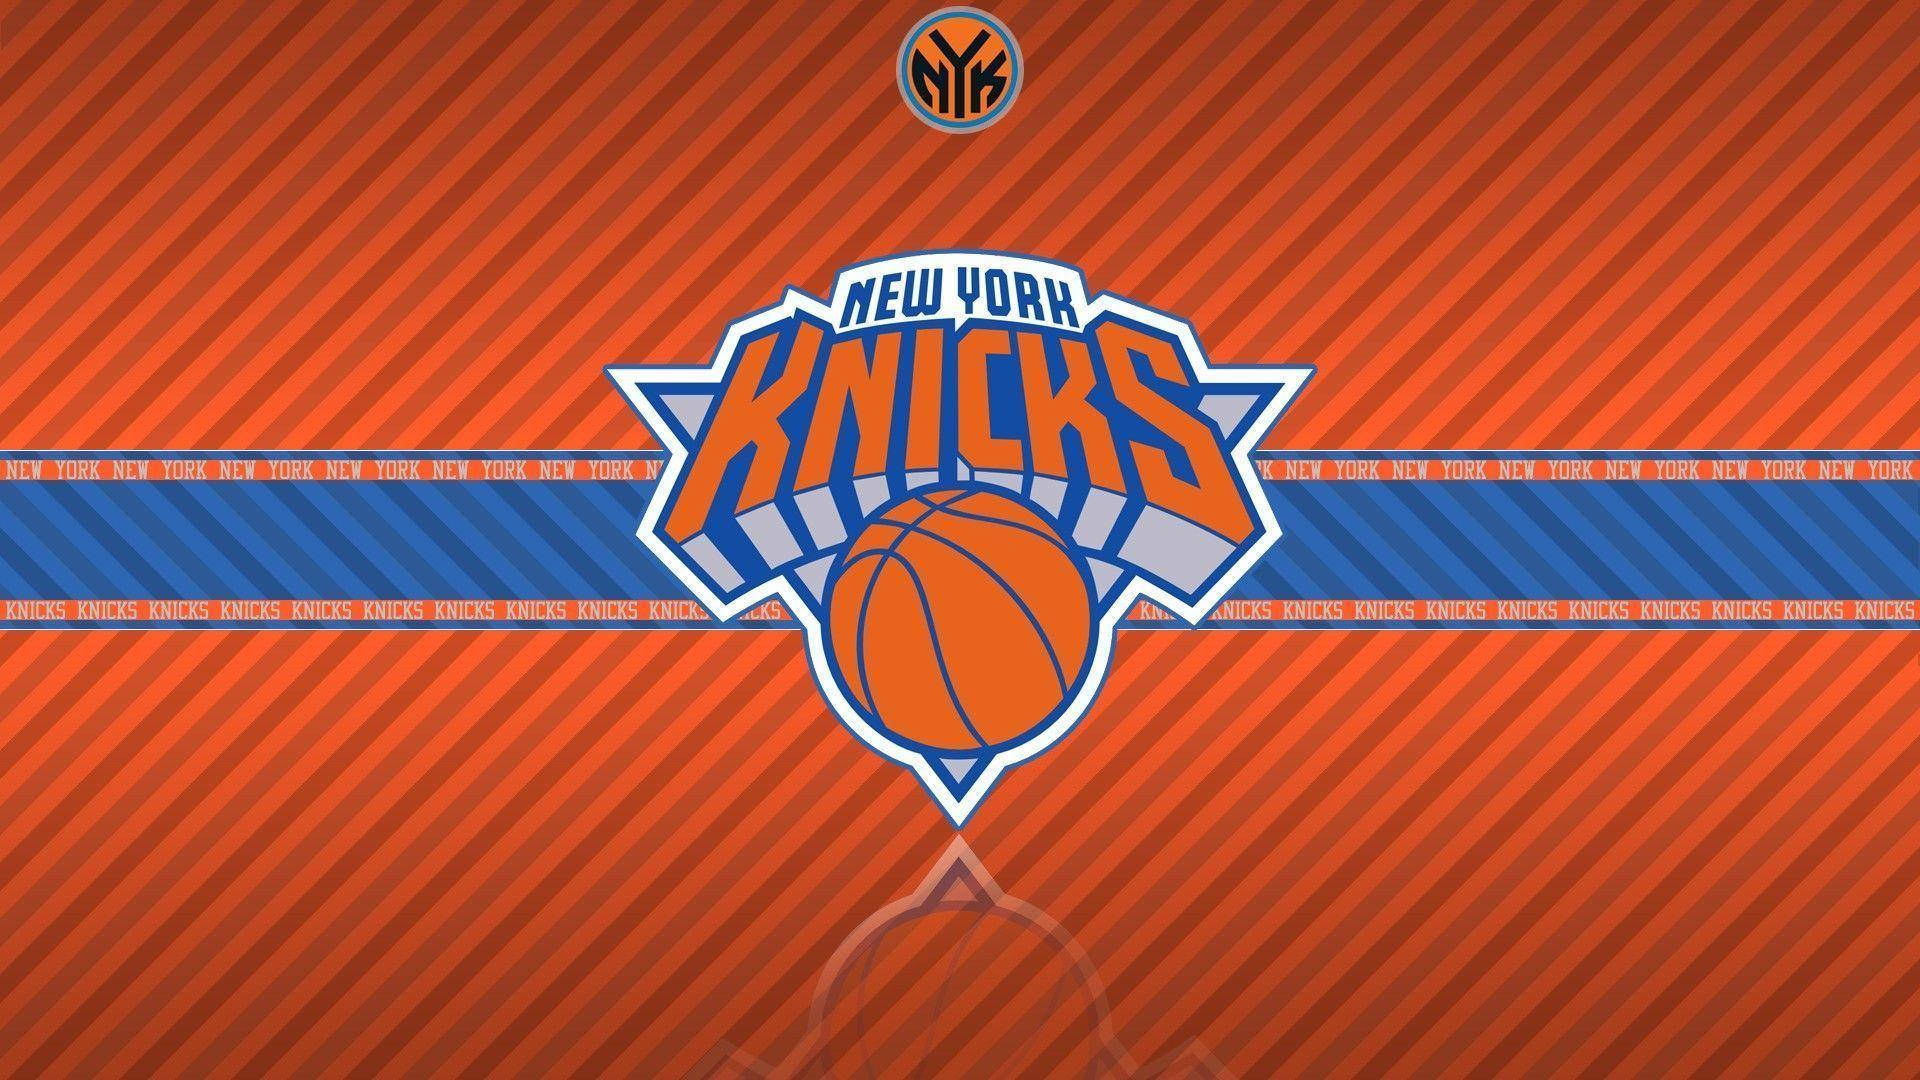 Top 999+ New York Knicks Wallpaper Full HD, 4K✅Free to Use